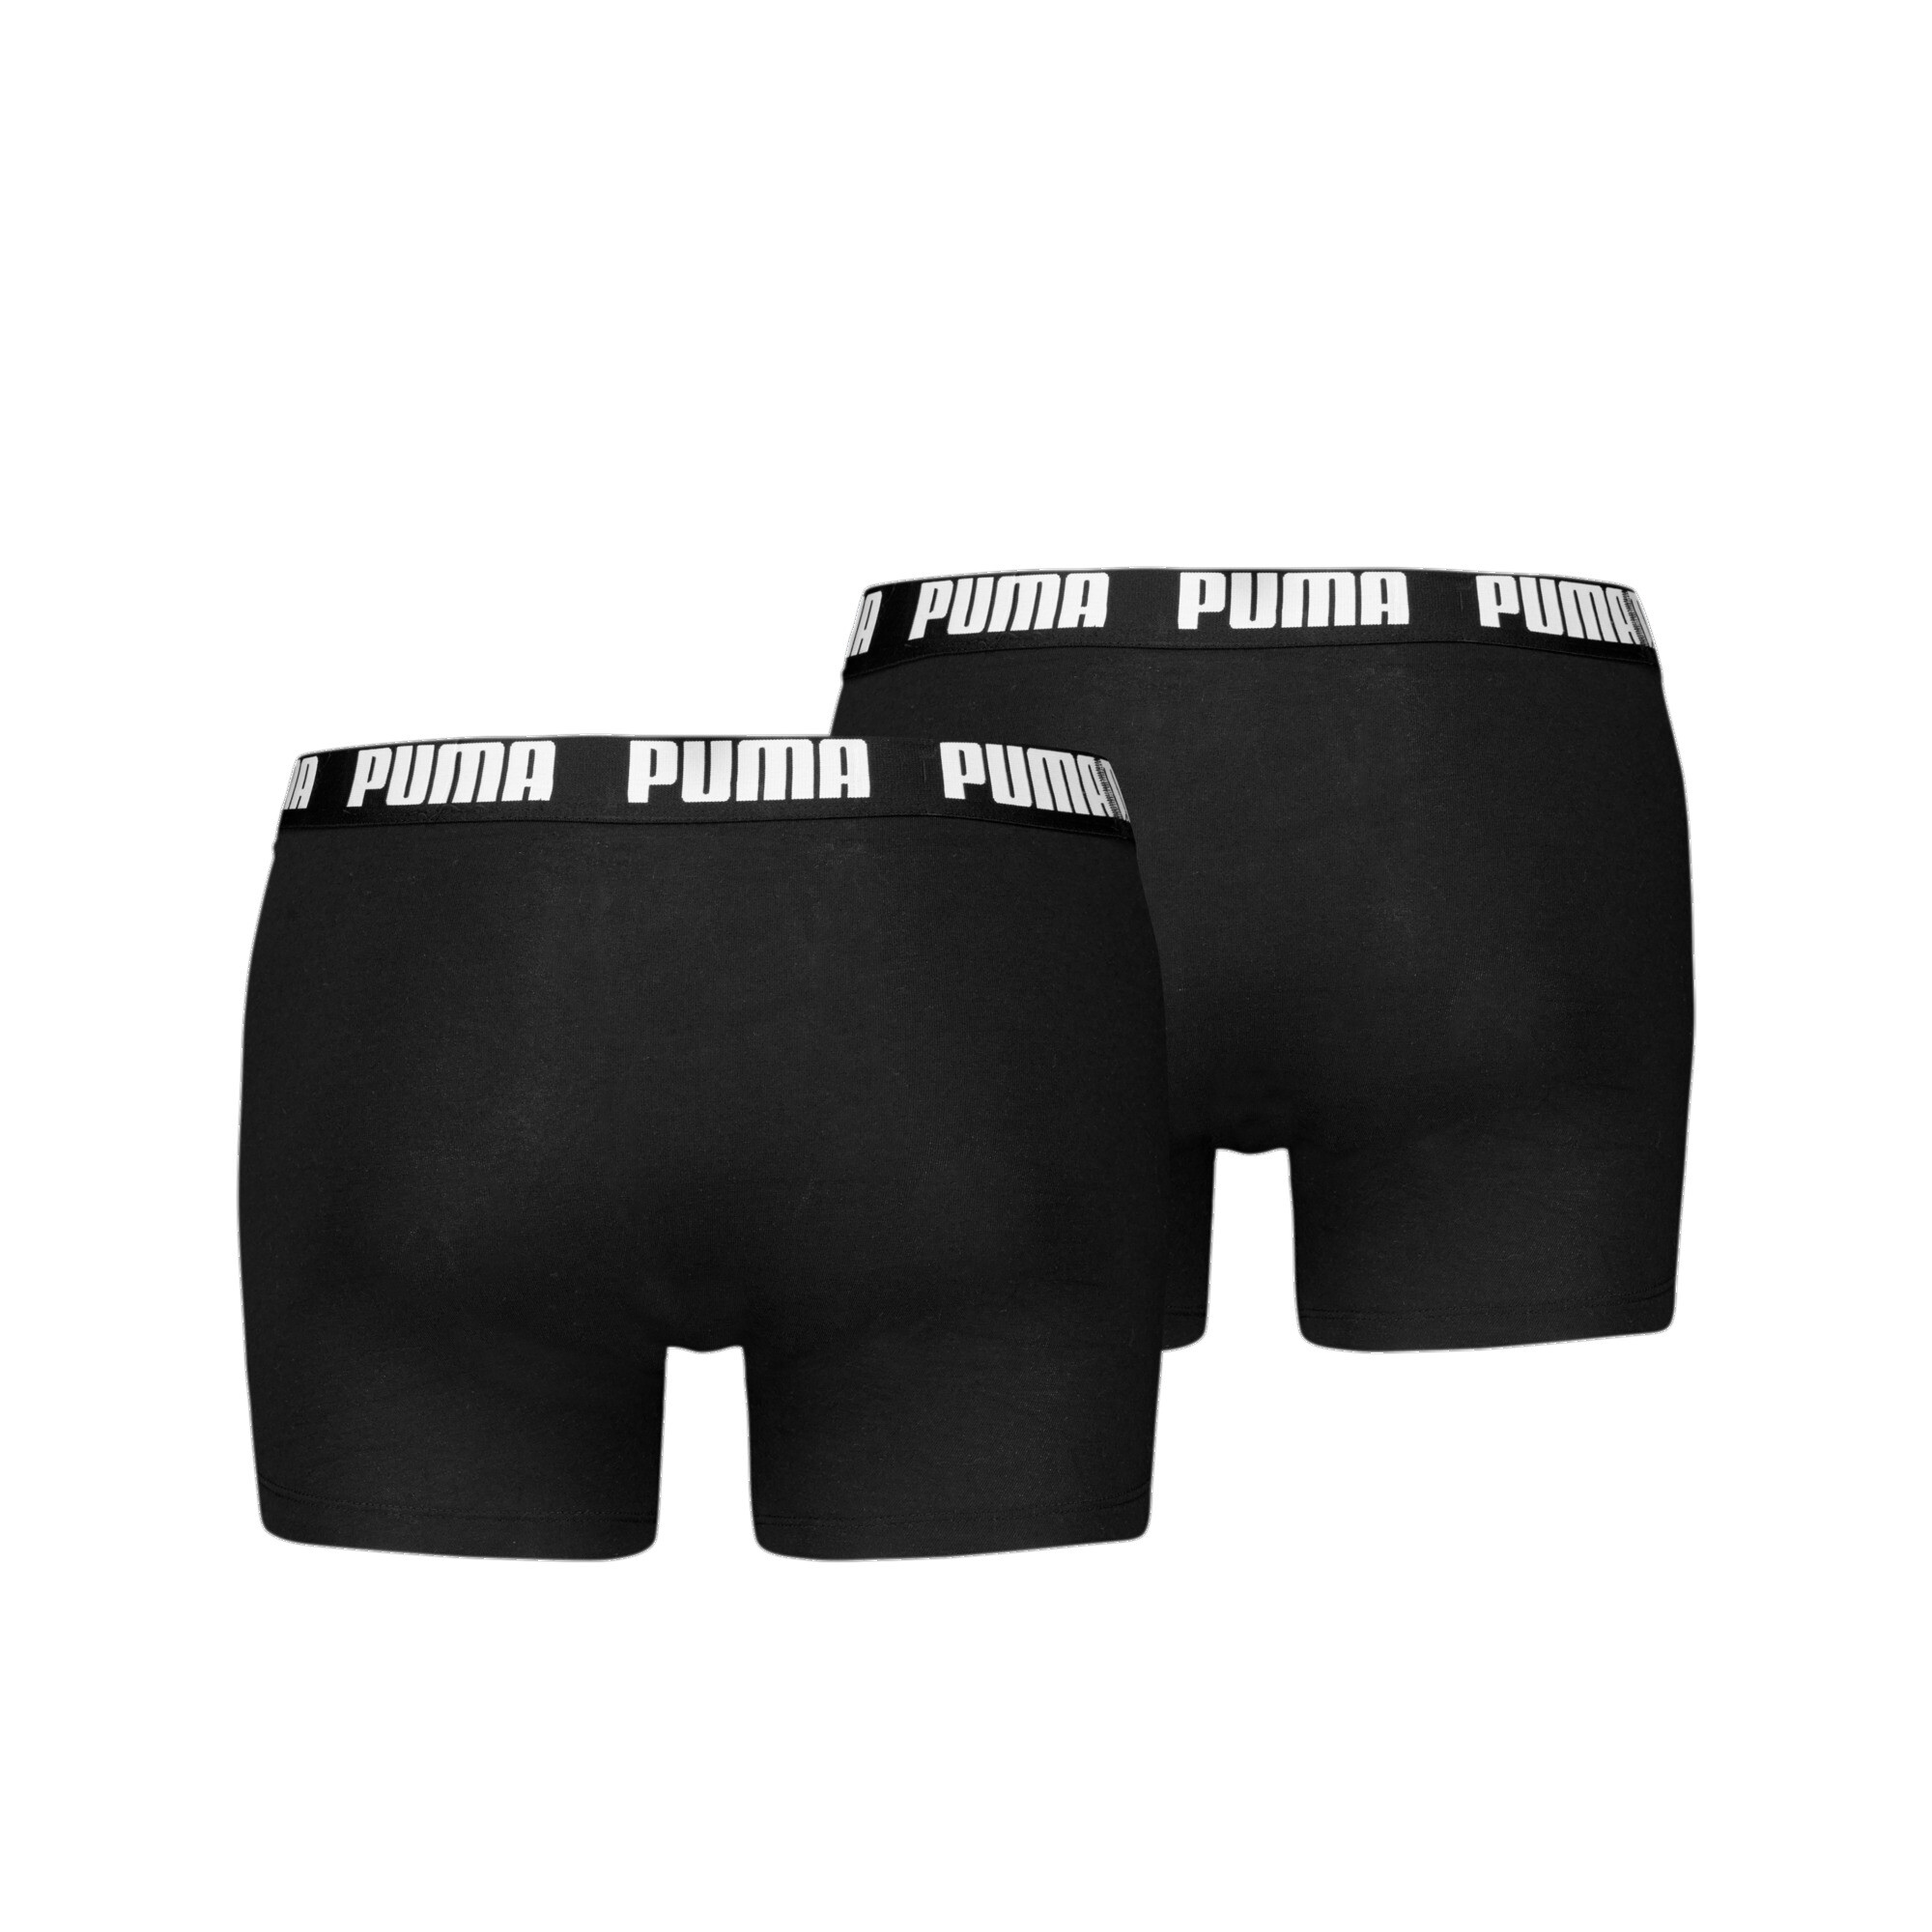 Men's Puma's Boxer Briefs 2 Pack, Black, Clothing